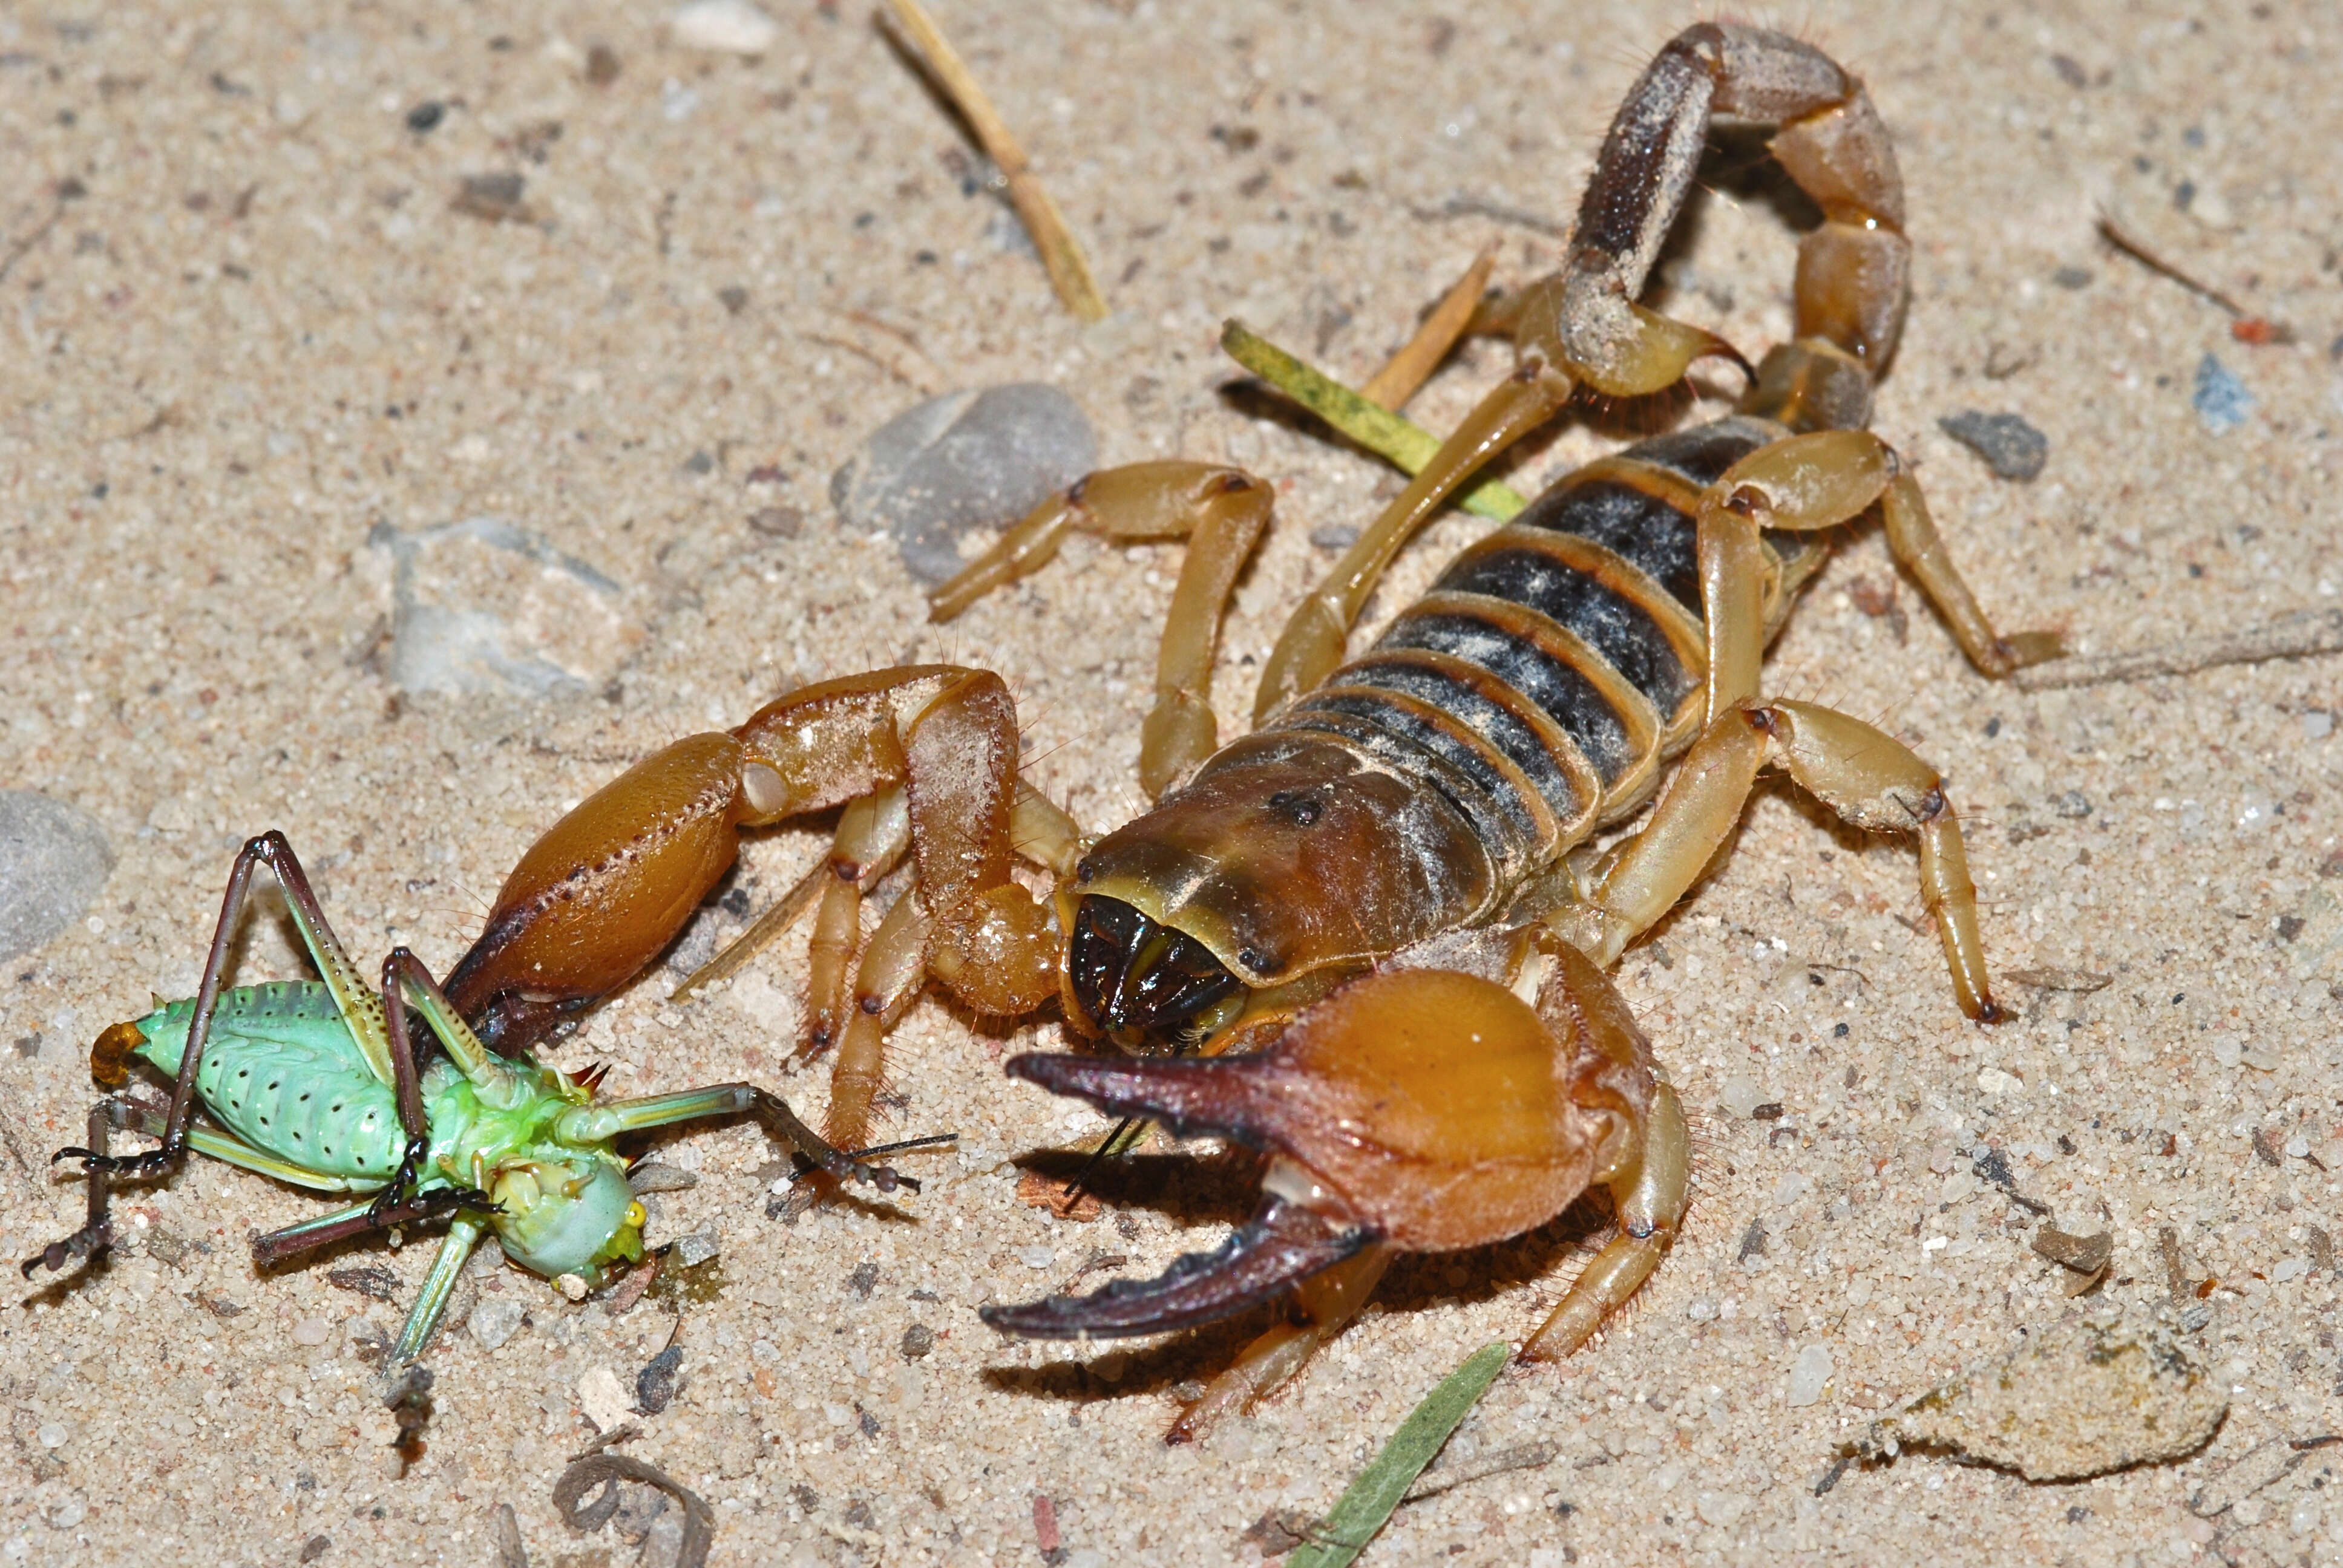 Image of hissing scorpions